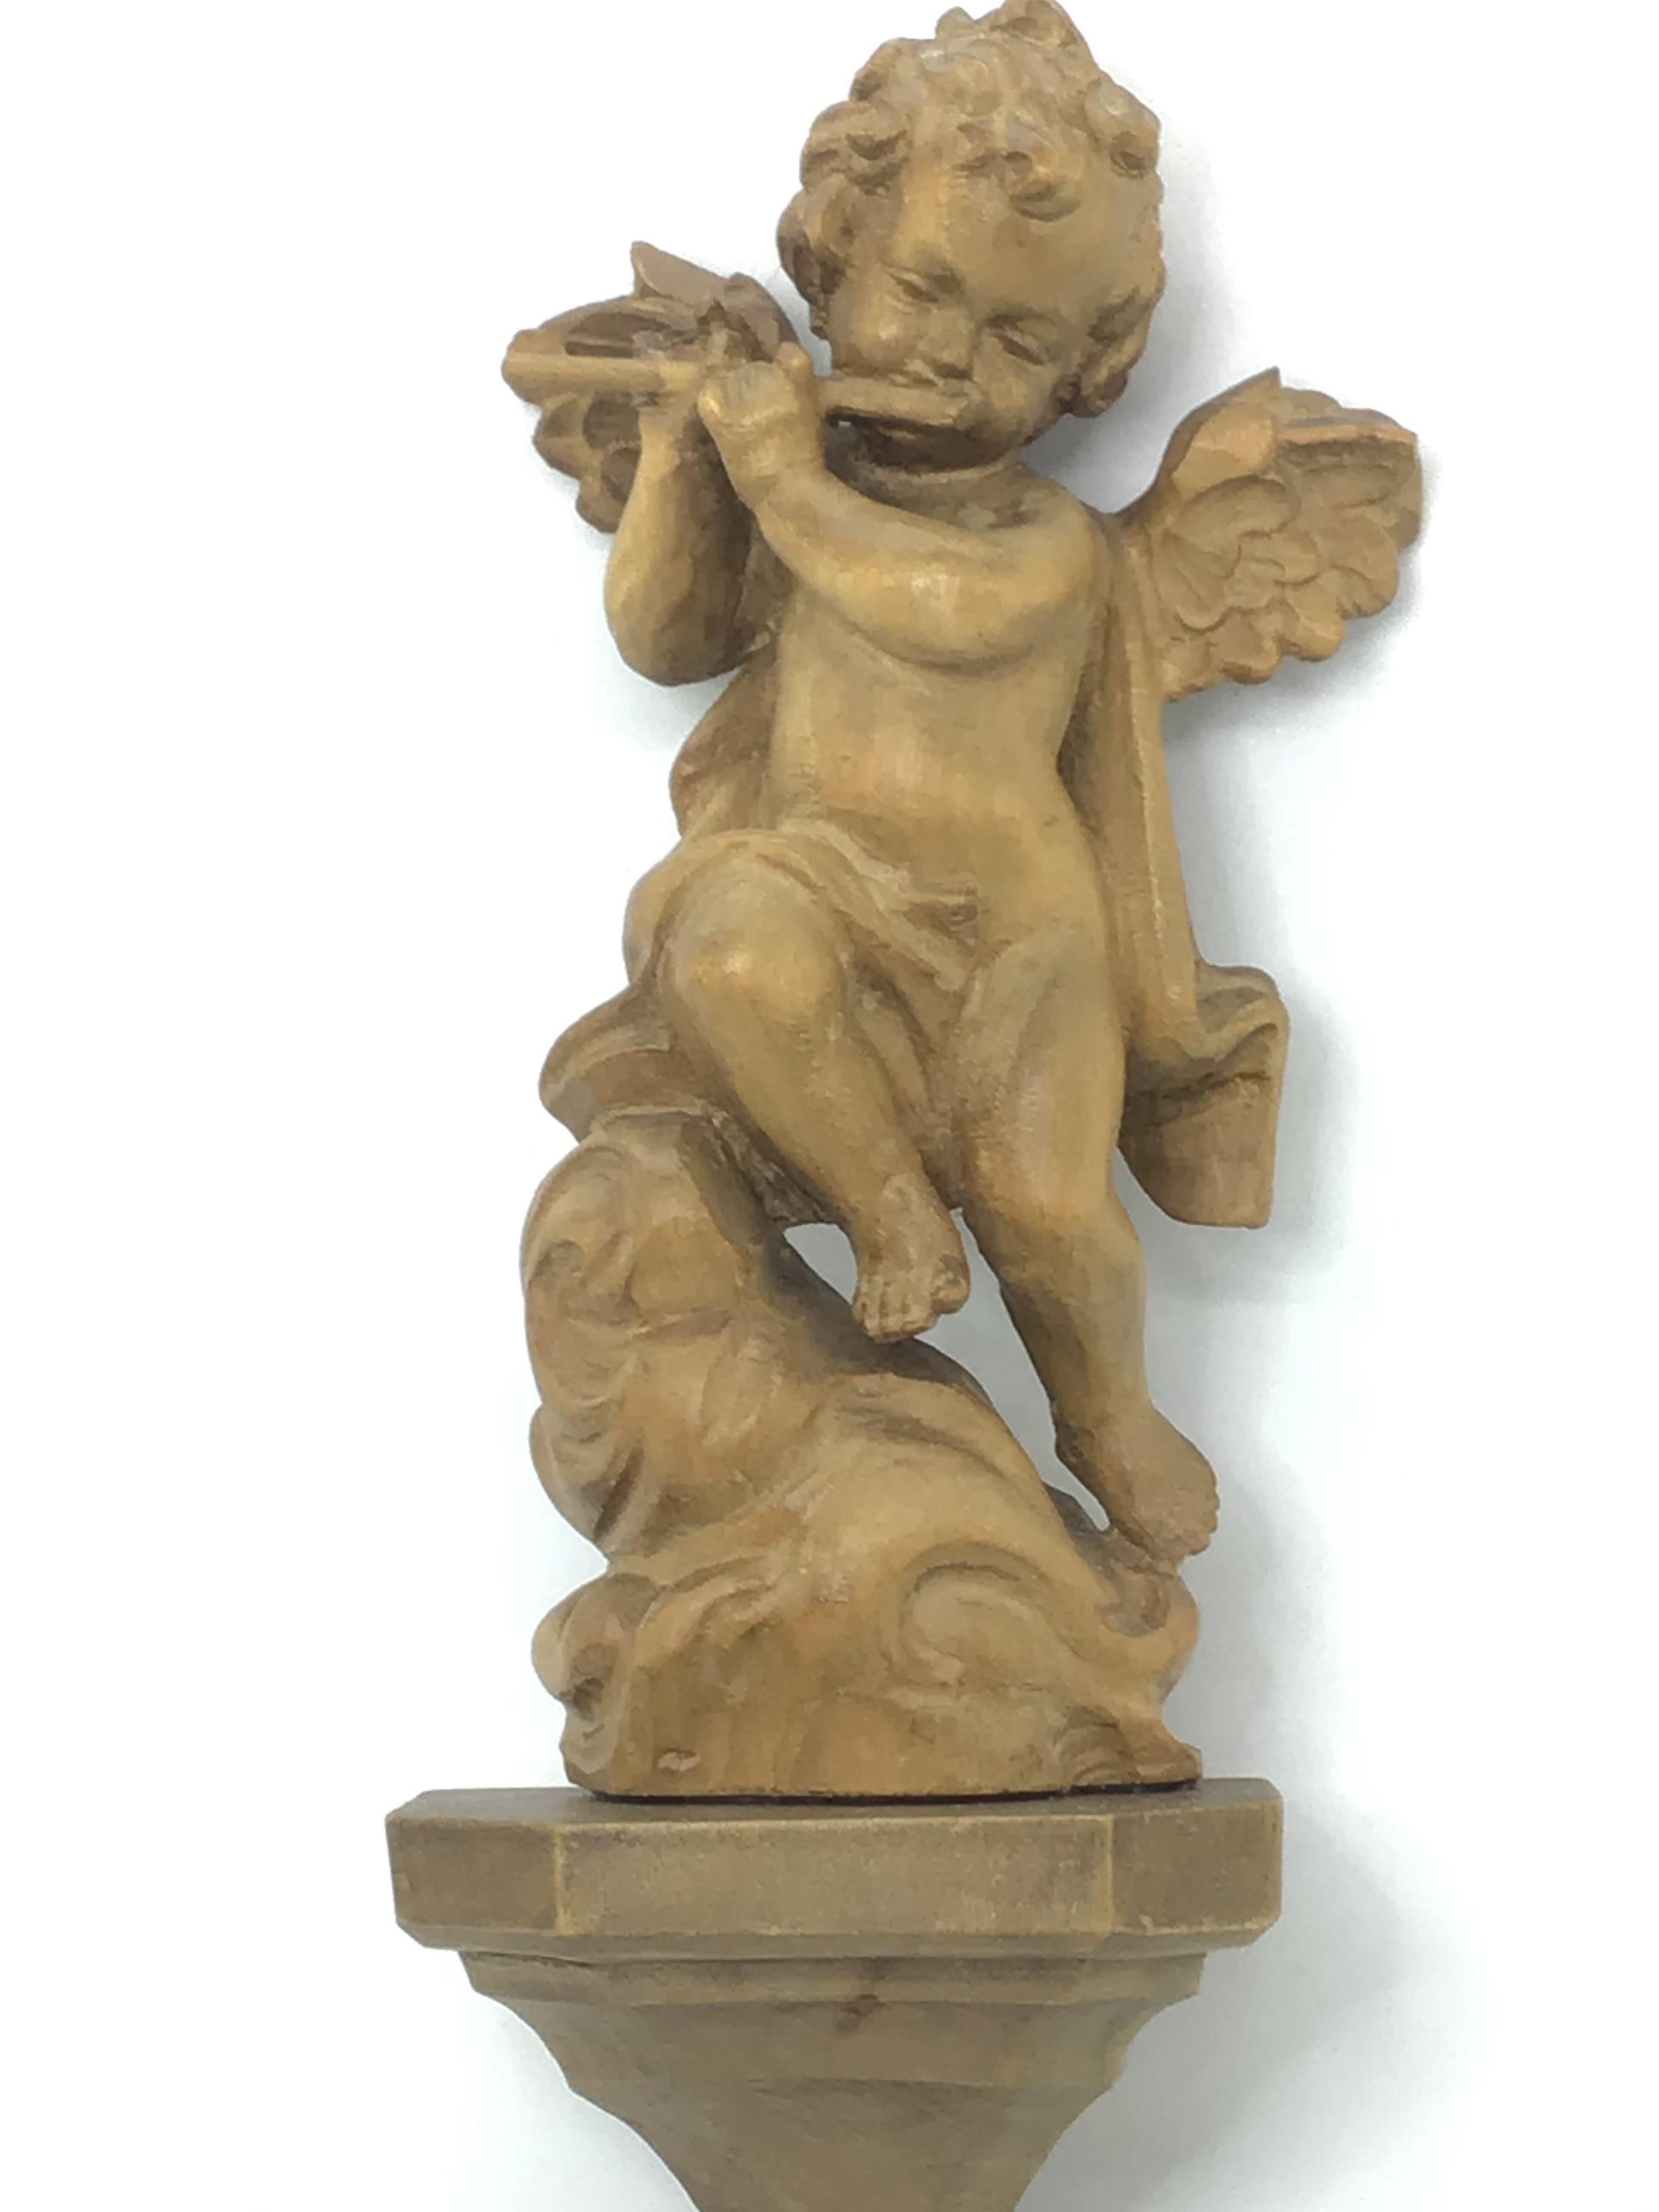 Angel Wall Sculpture  Angel with  Flute Wooden Sculpture